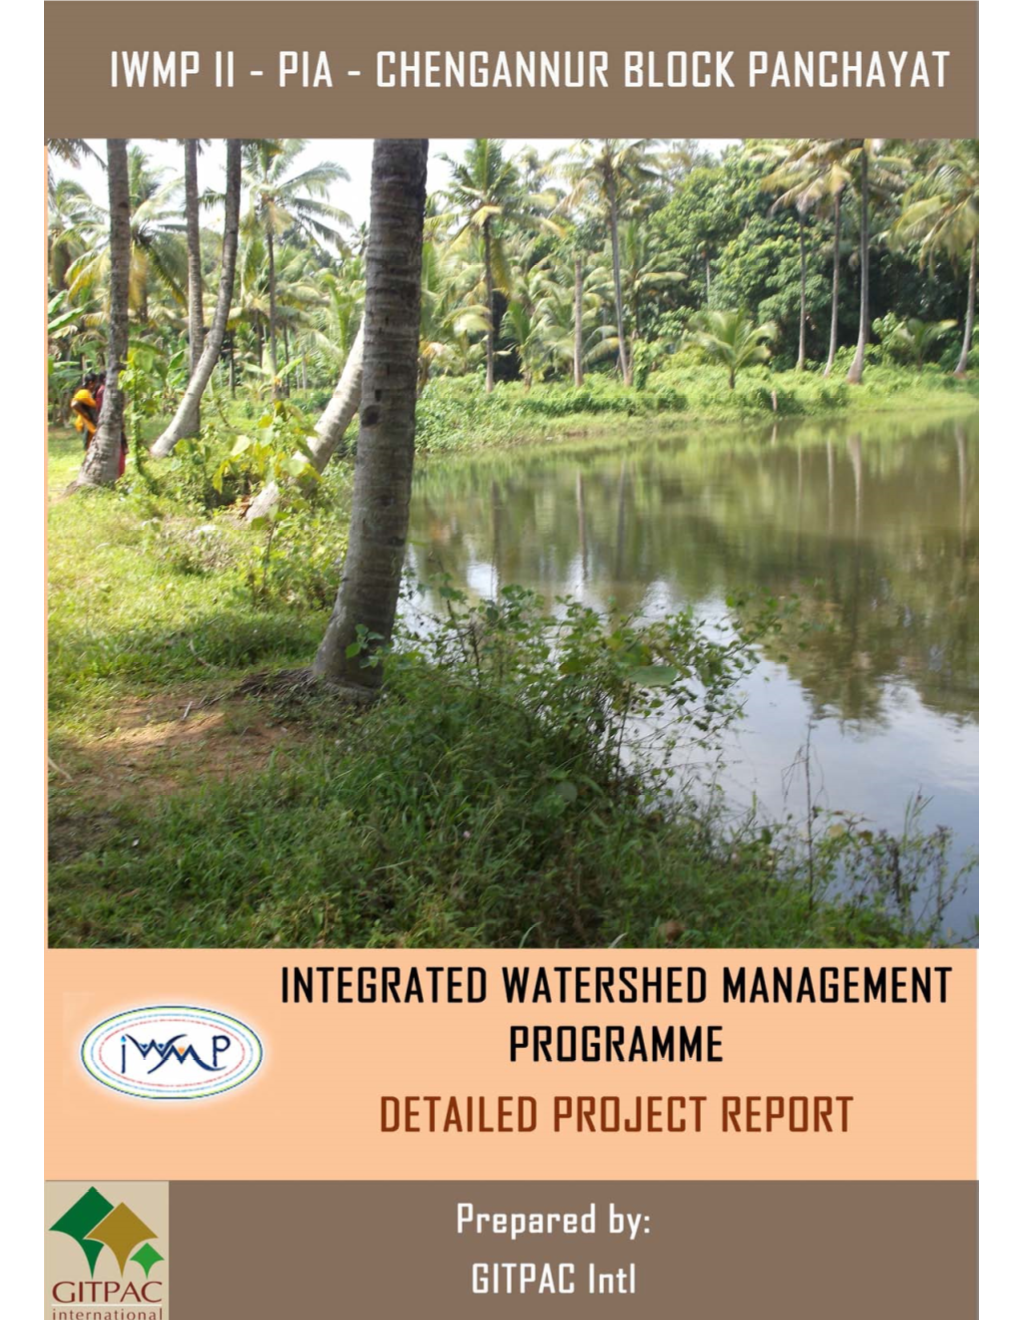 Integrated Watershed Management Programme II, PIA - Chengannur Block Panchayat